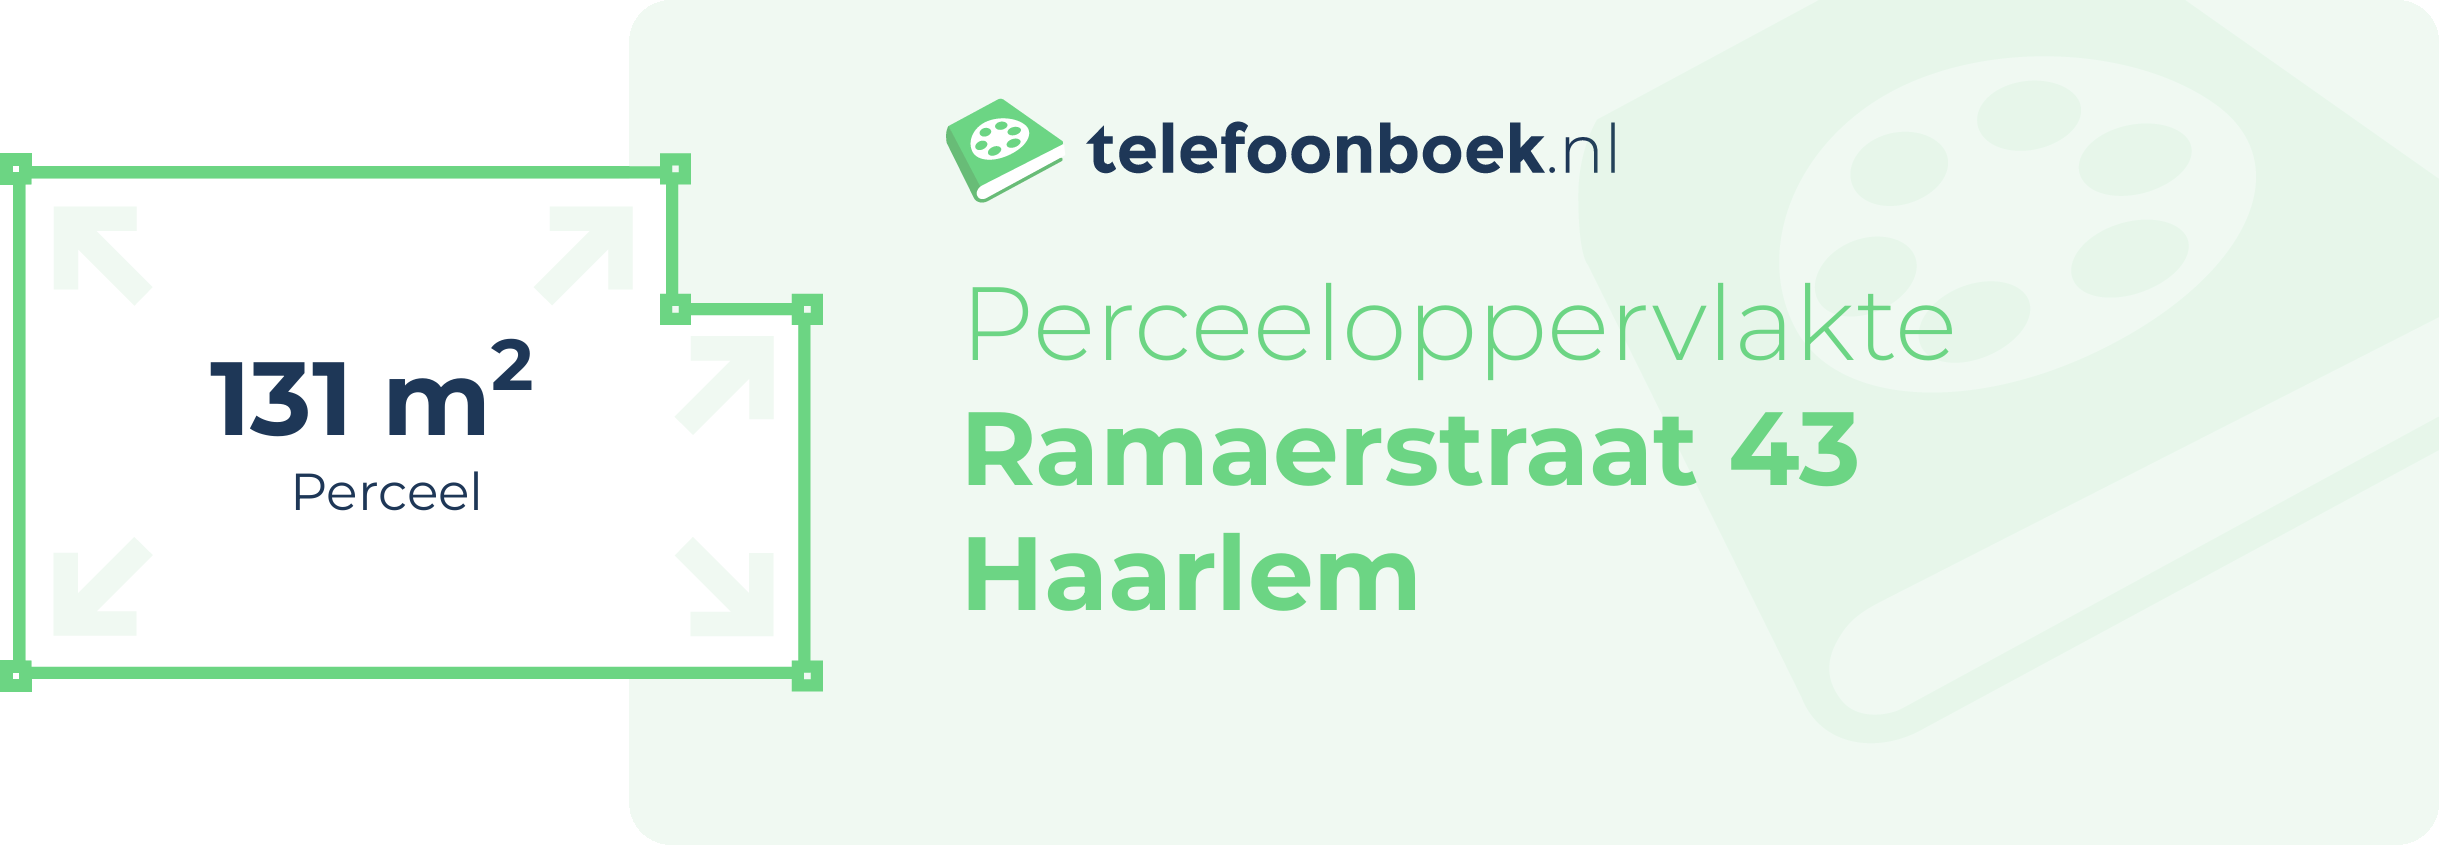 Perceeloppervlakte Ramaerstraat 43 Haarlem